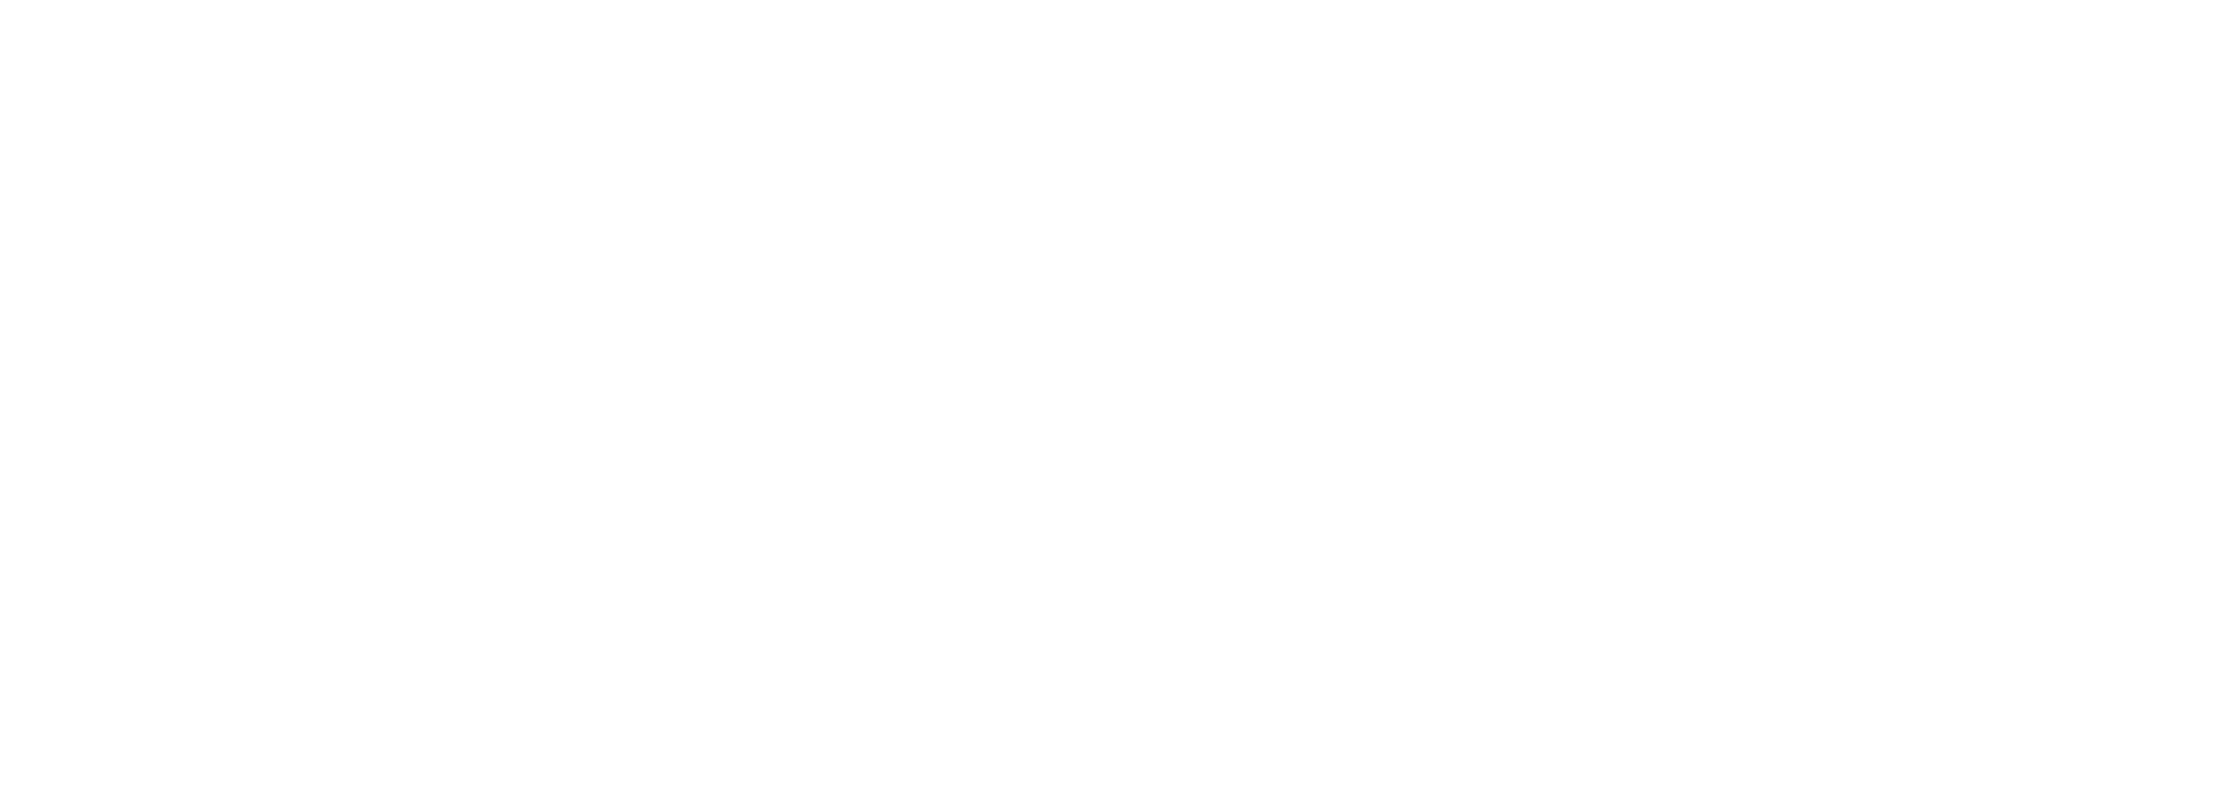 Castel Engineering